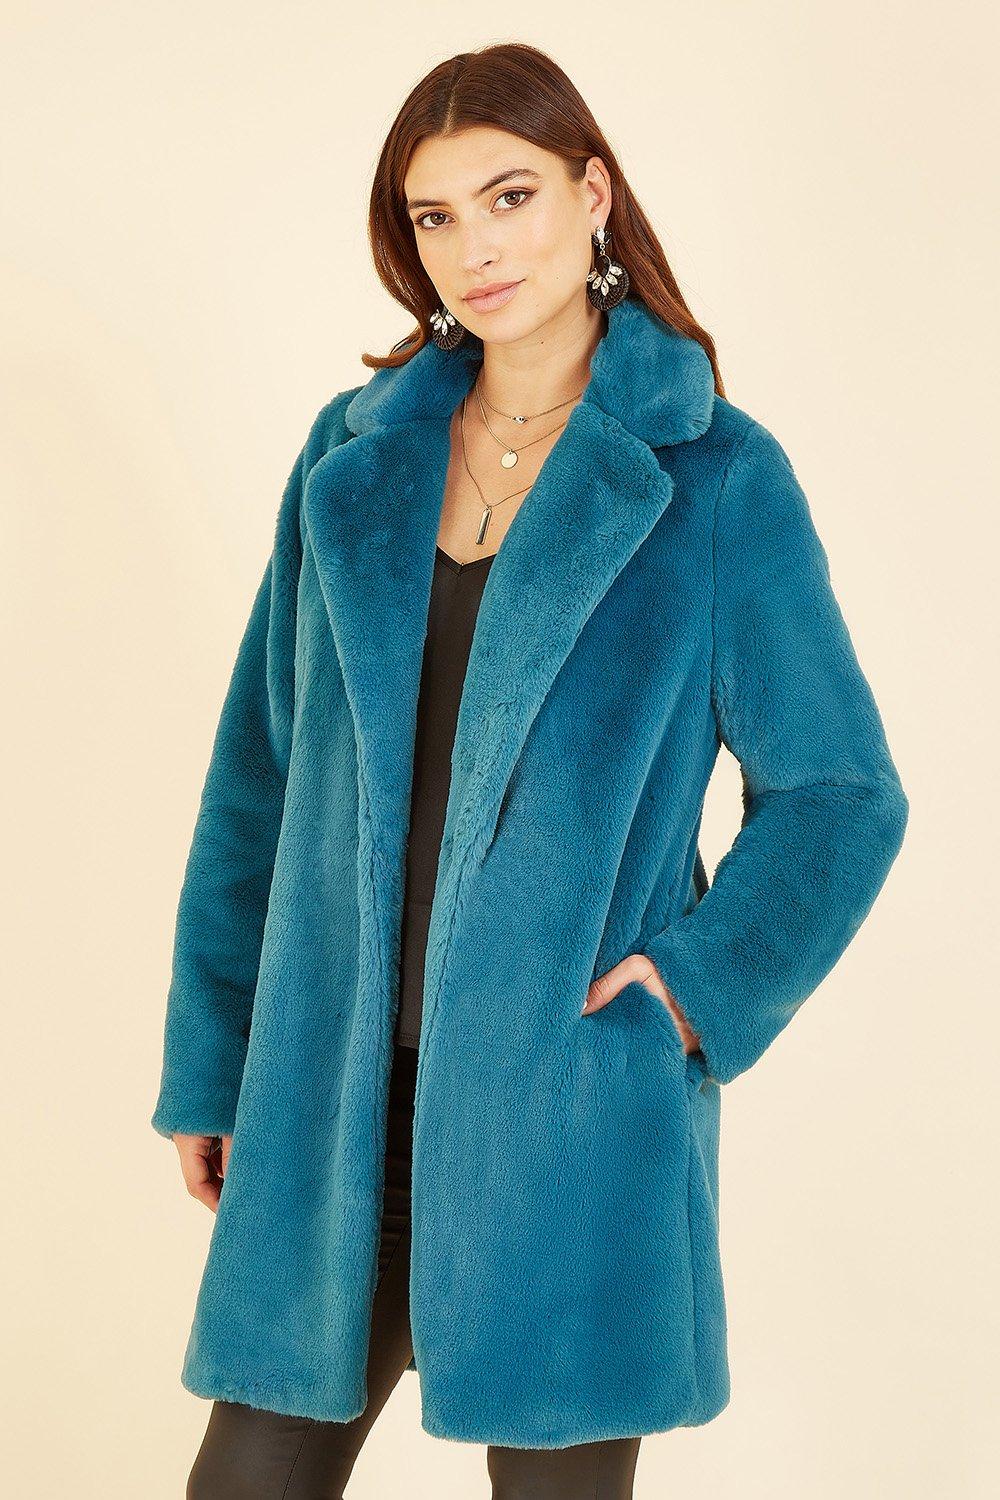 Jackets & Coats | Teal Faux Fur Coat | Yumi